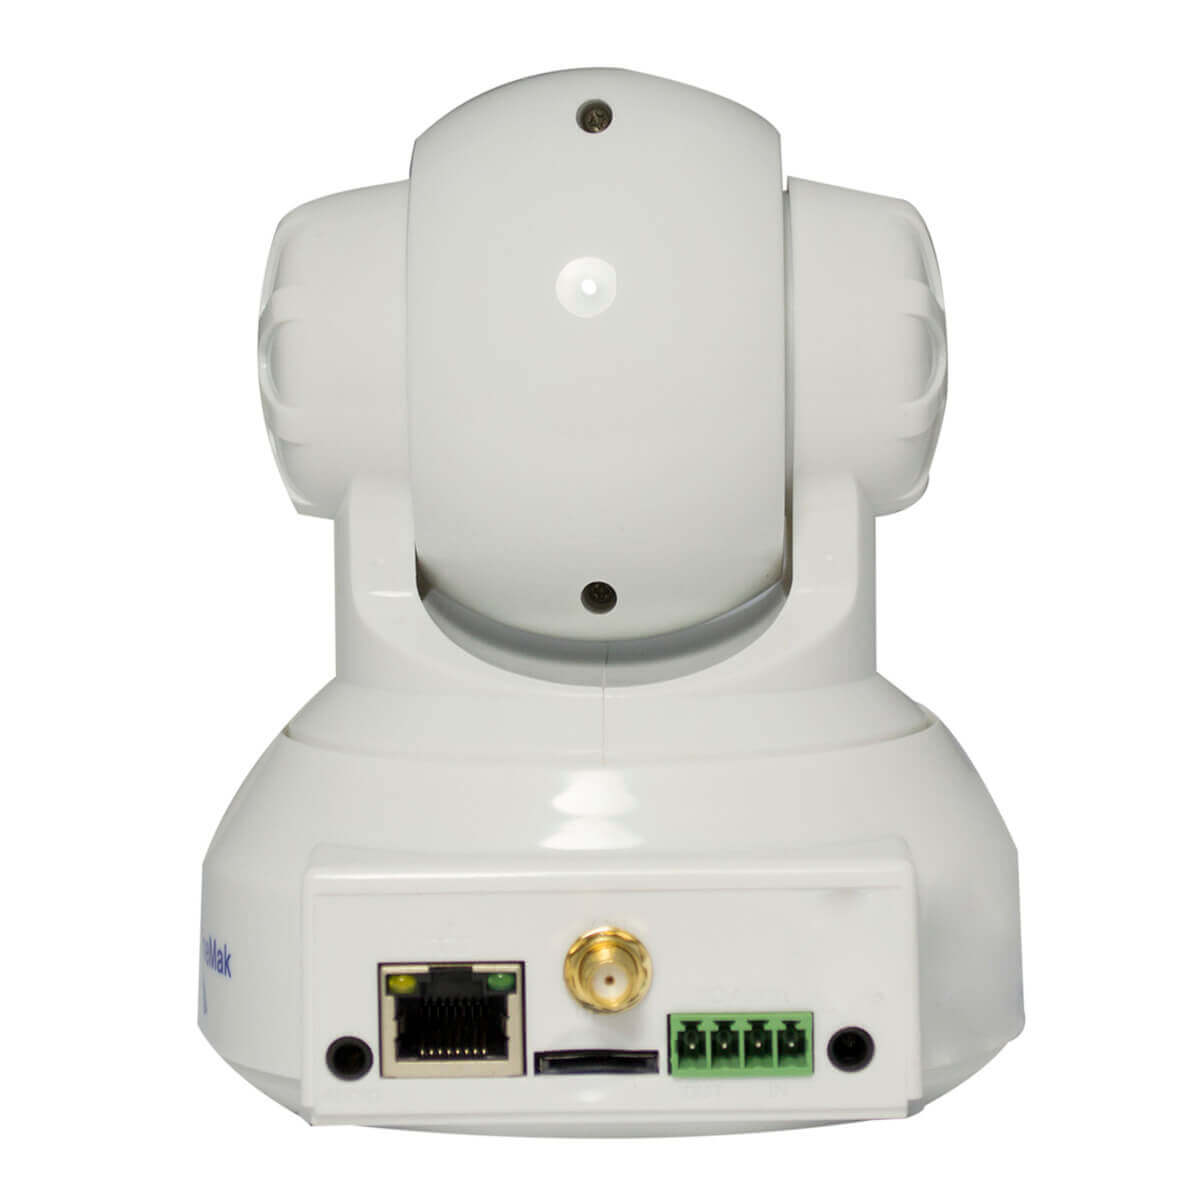 Camara tipo domo IP, Sensor CMOS 1/3, resolucion 1.3Mp, 8 LEDs, Wi-Fi